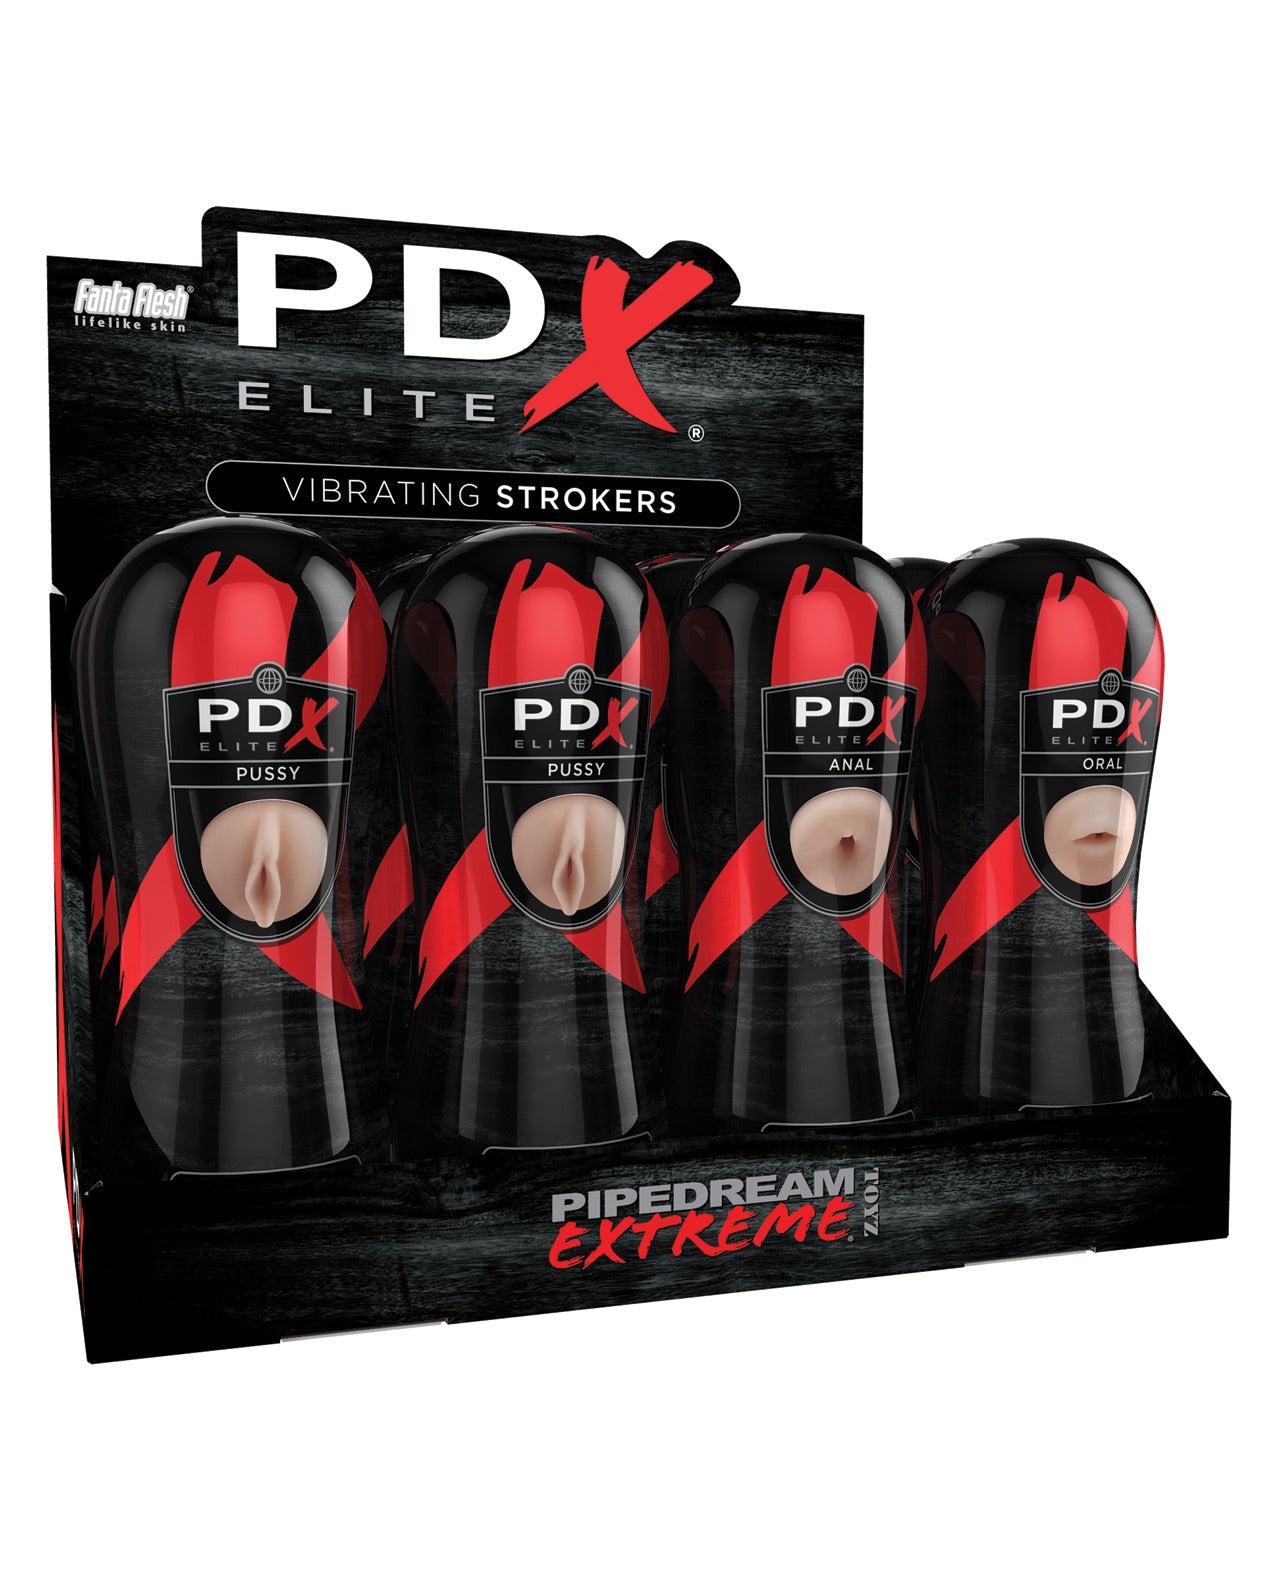 PDX Elite Vibrating Strokers Display - Display of 12